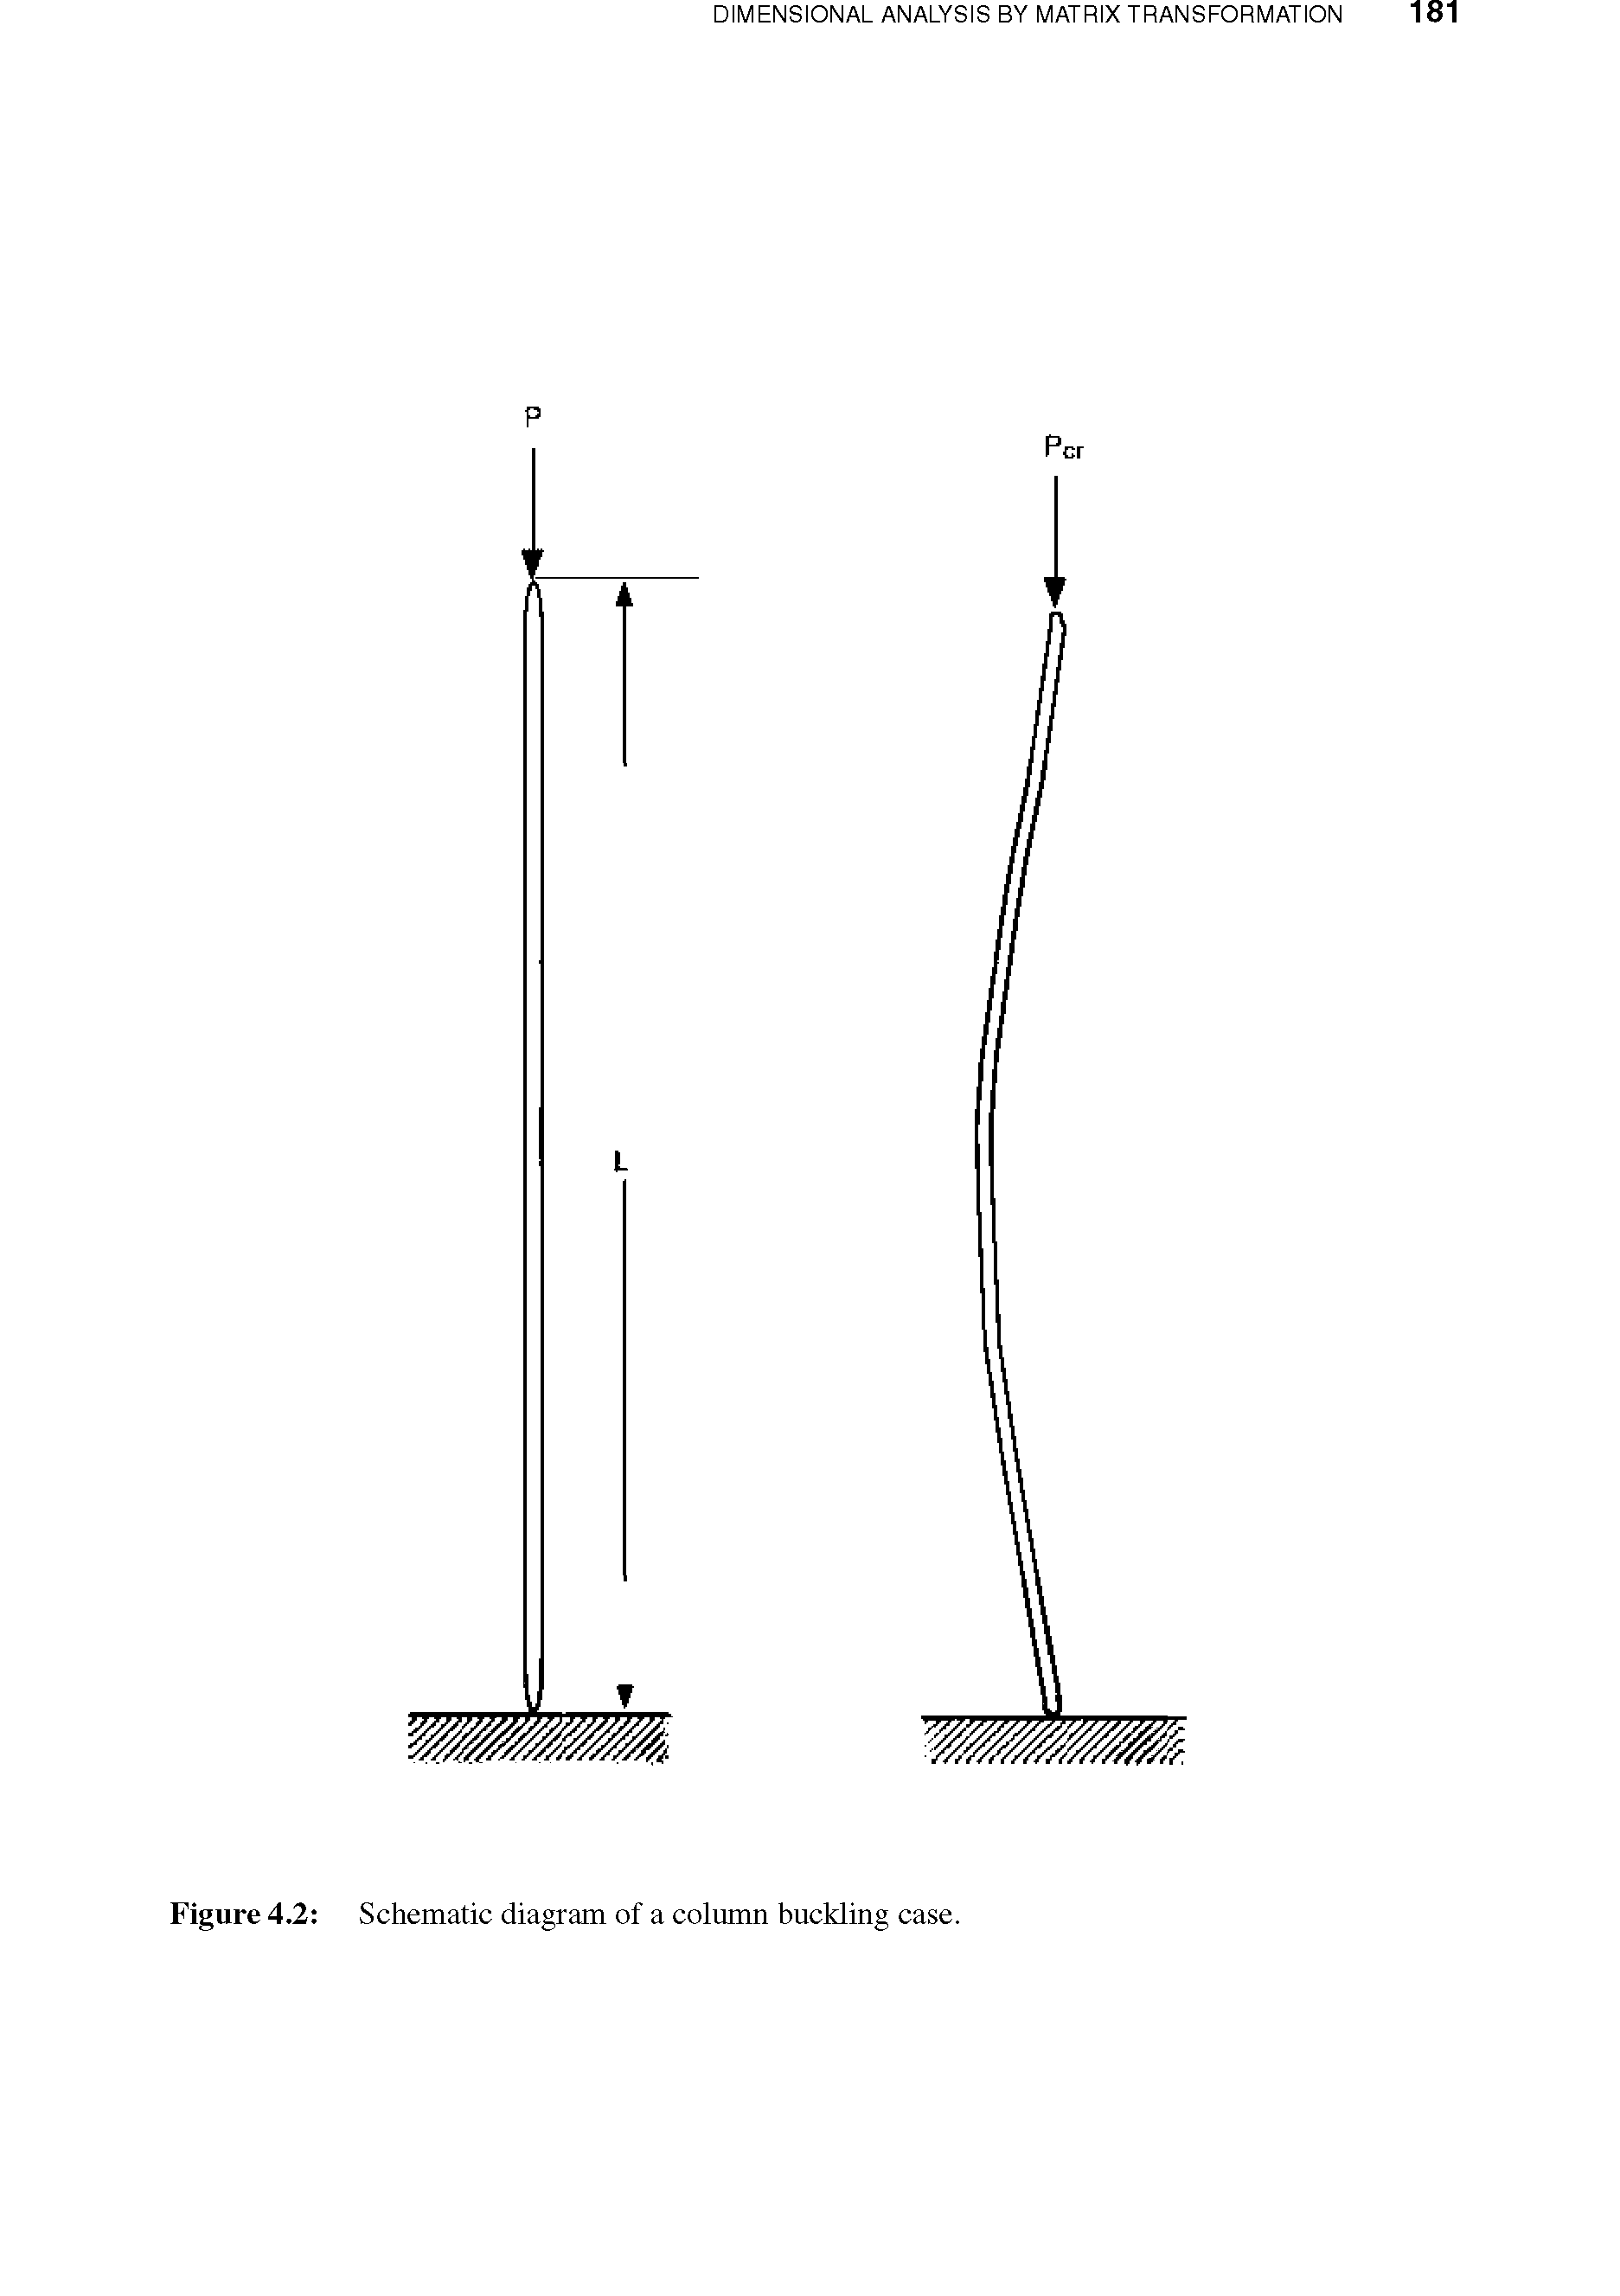 Figure 4.2 Schematic diagram of a column buckling case.